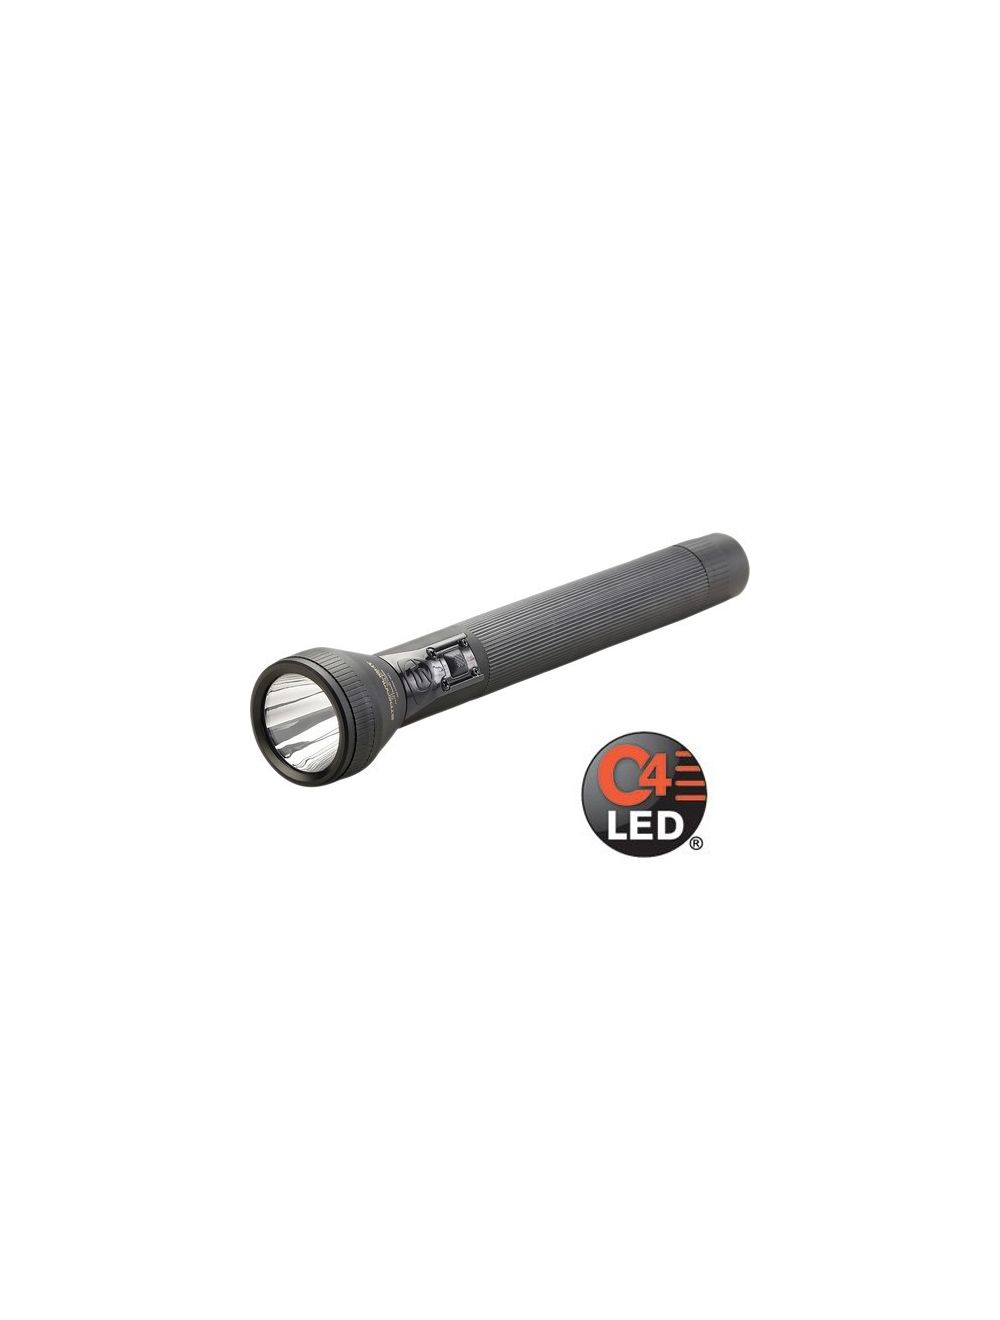 Belachelijk Ongeldig beschermen Streamlight SL-20LP Full LED Zaklamp oplaadbaar zwart losse lantaarn kopen?  Zaklampen.nl